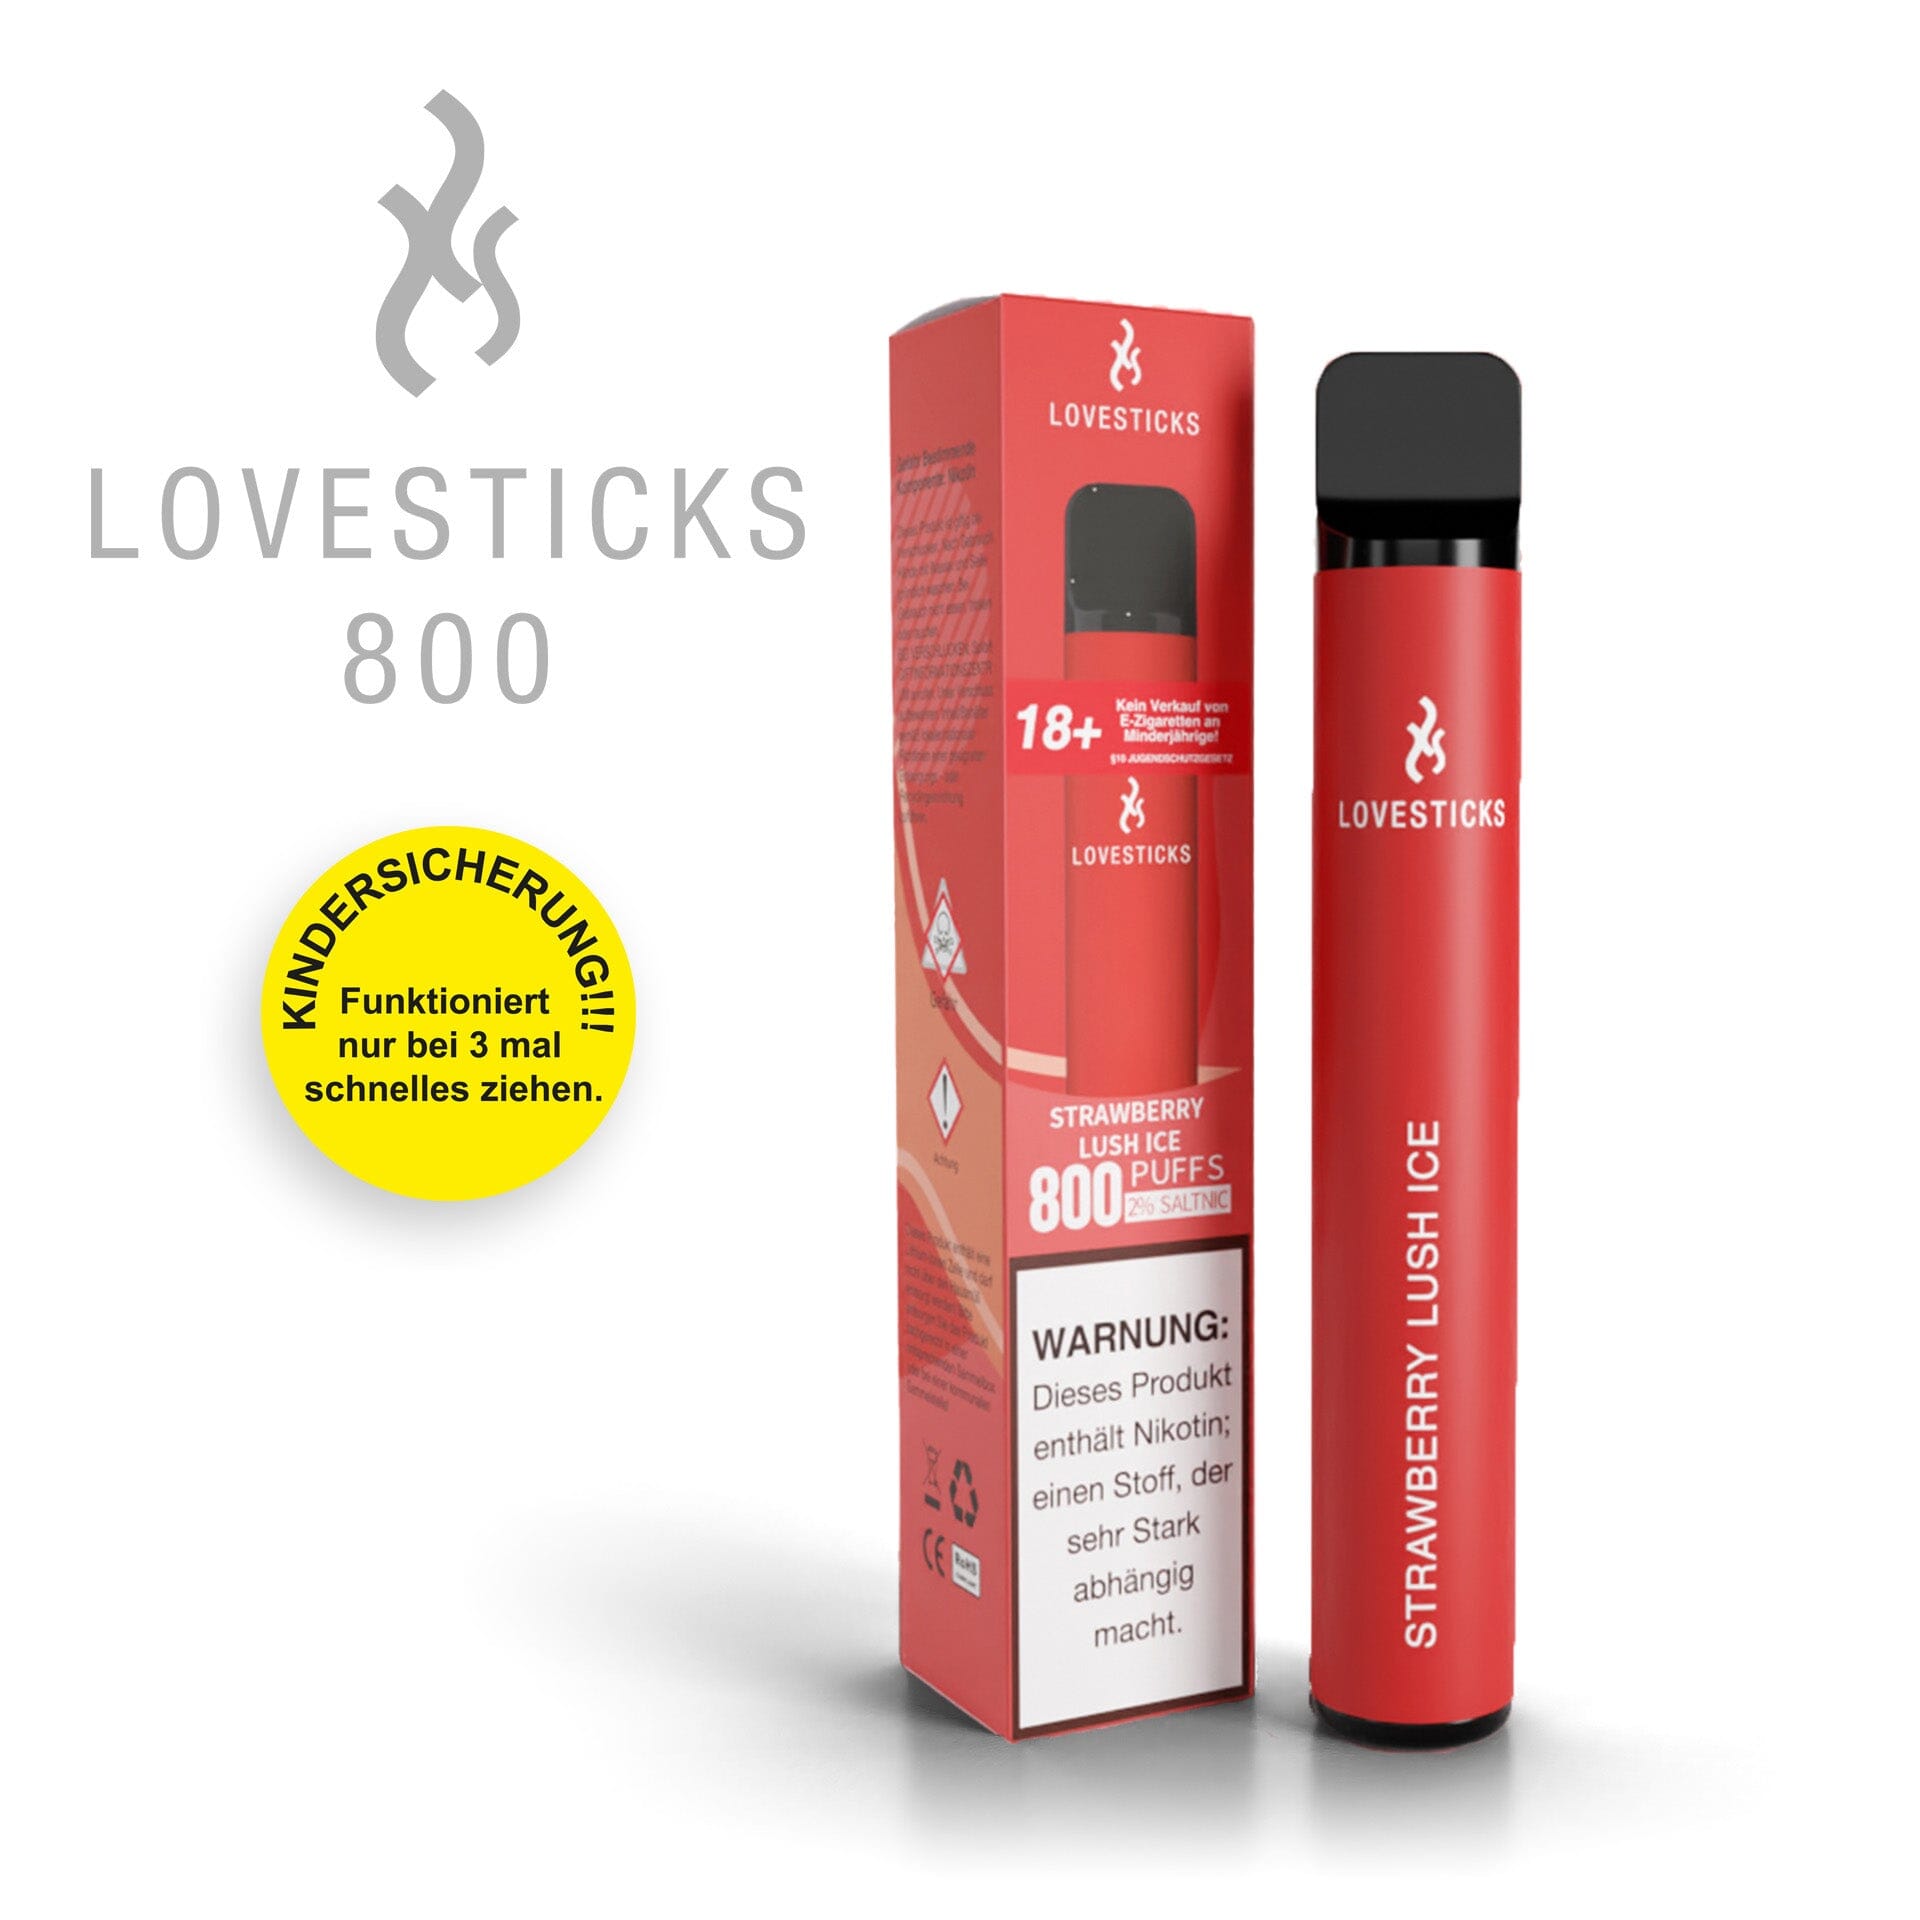 LOVESTICKS 800 – STRAWBERRY LUSH ICE E-Zigarette (8125159899431)